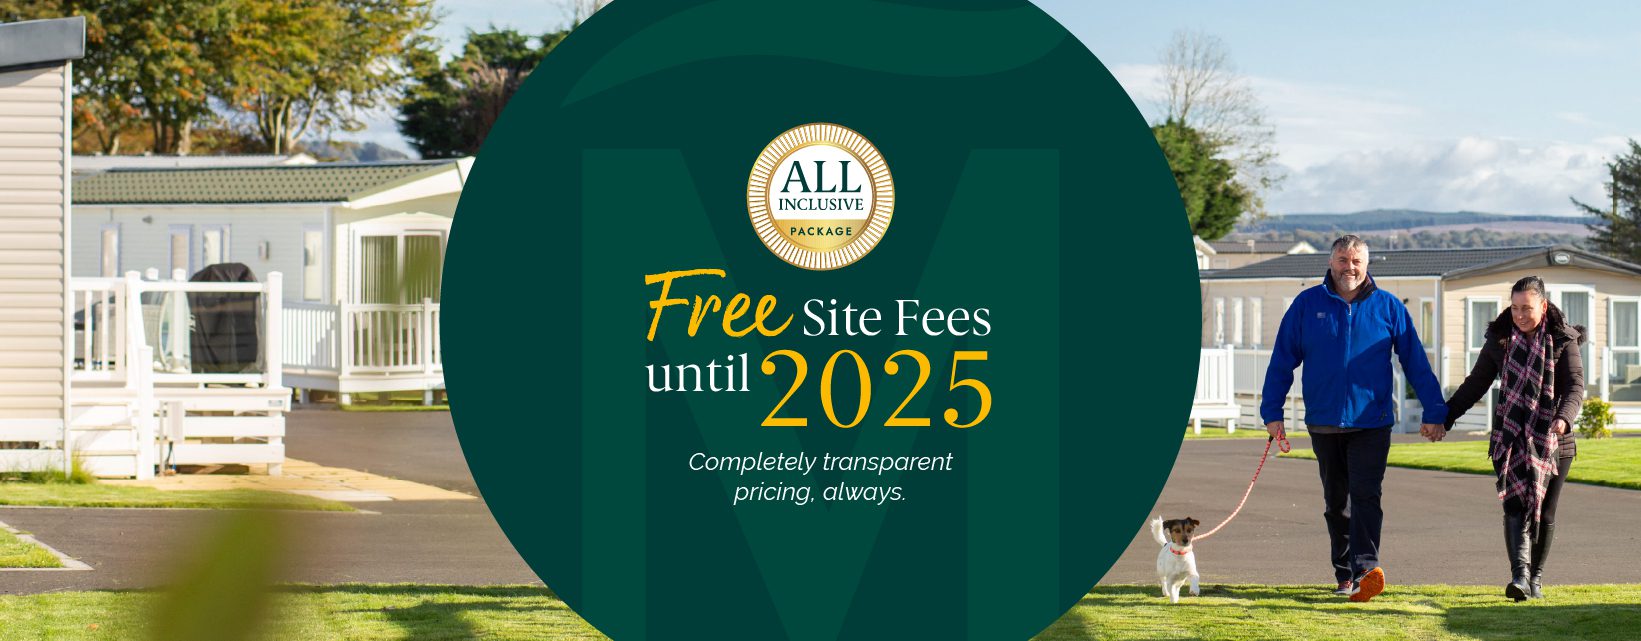 Free site fees until 2025*